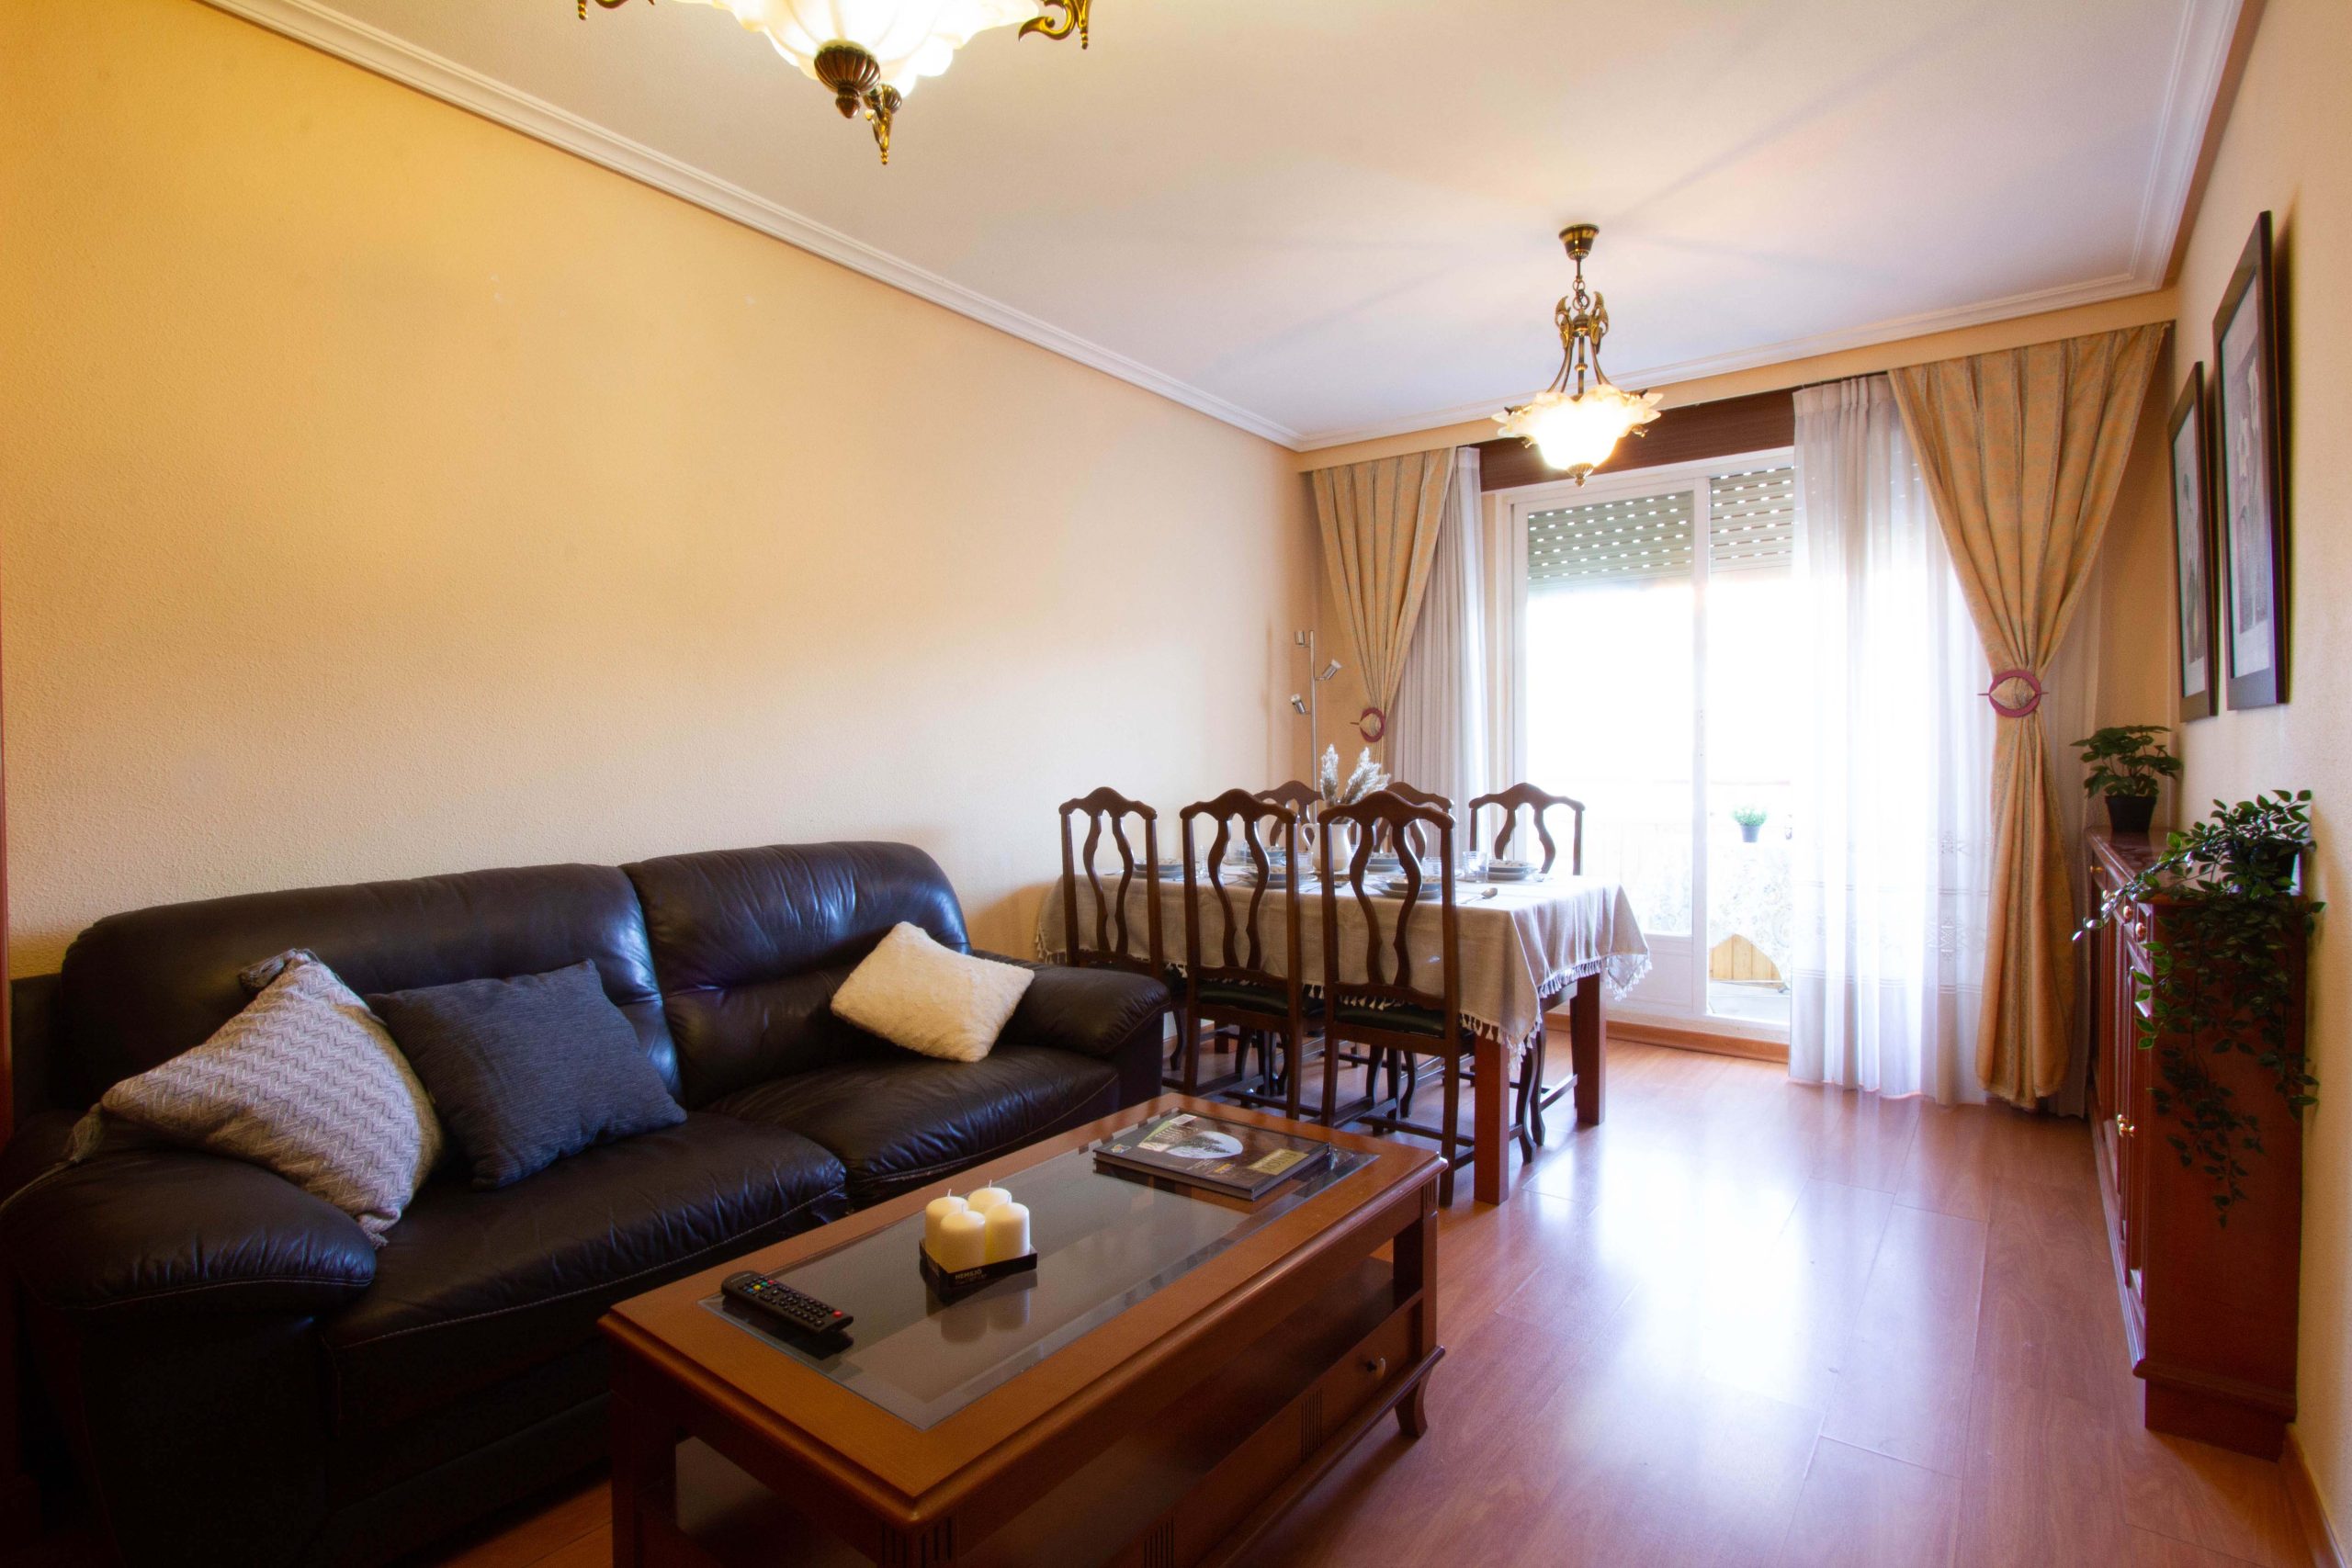 Zelanda - Furnished apartment for rent in Salamanca